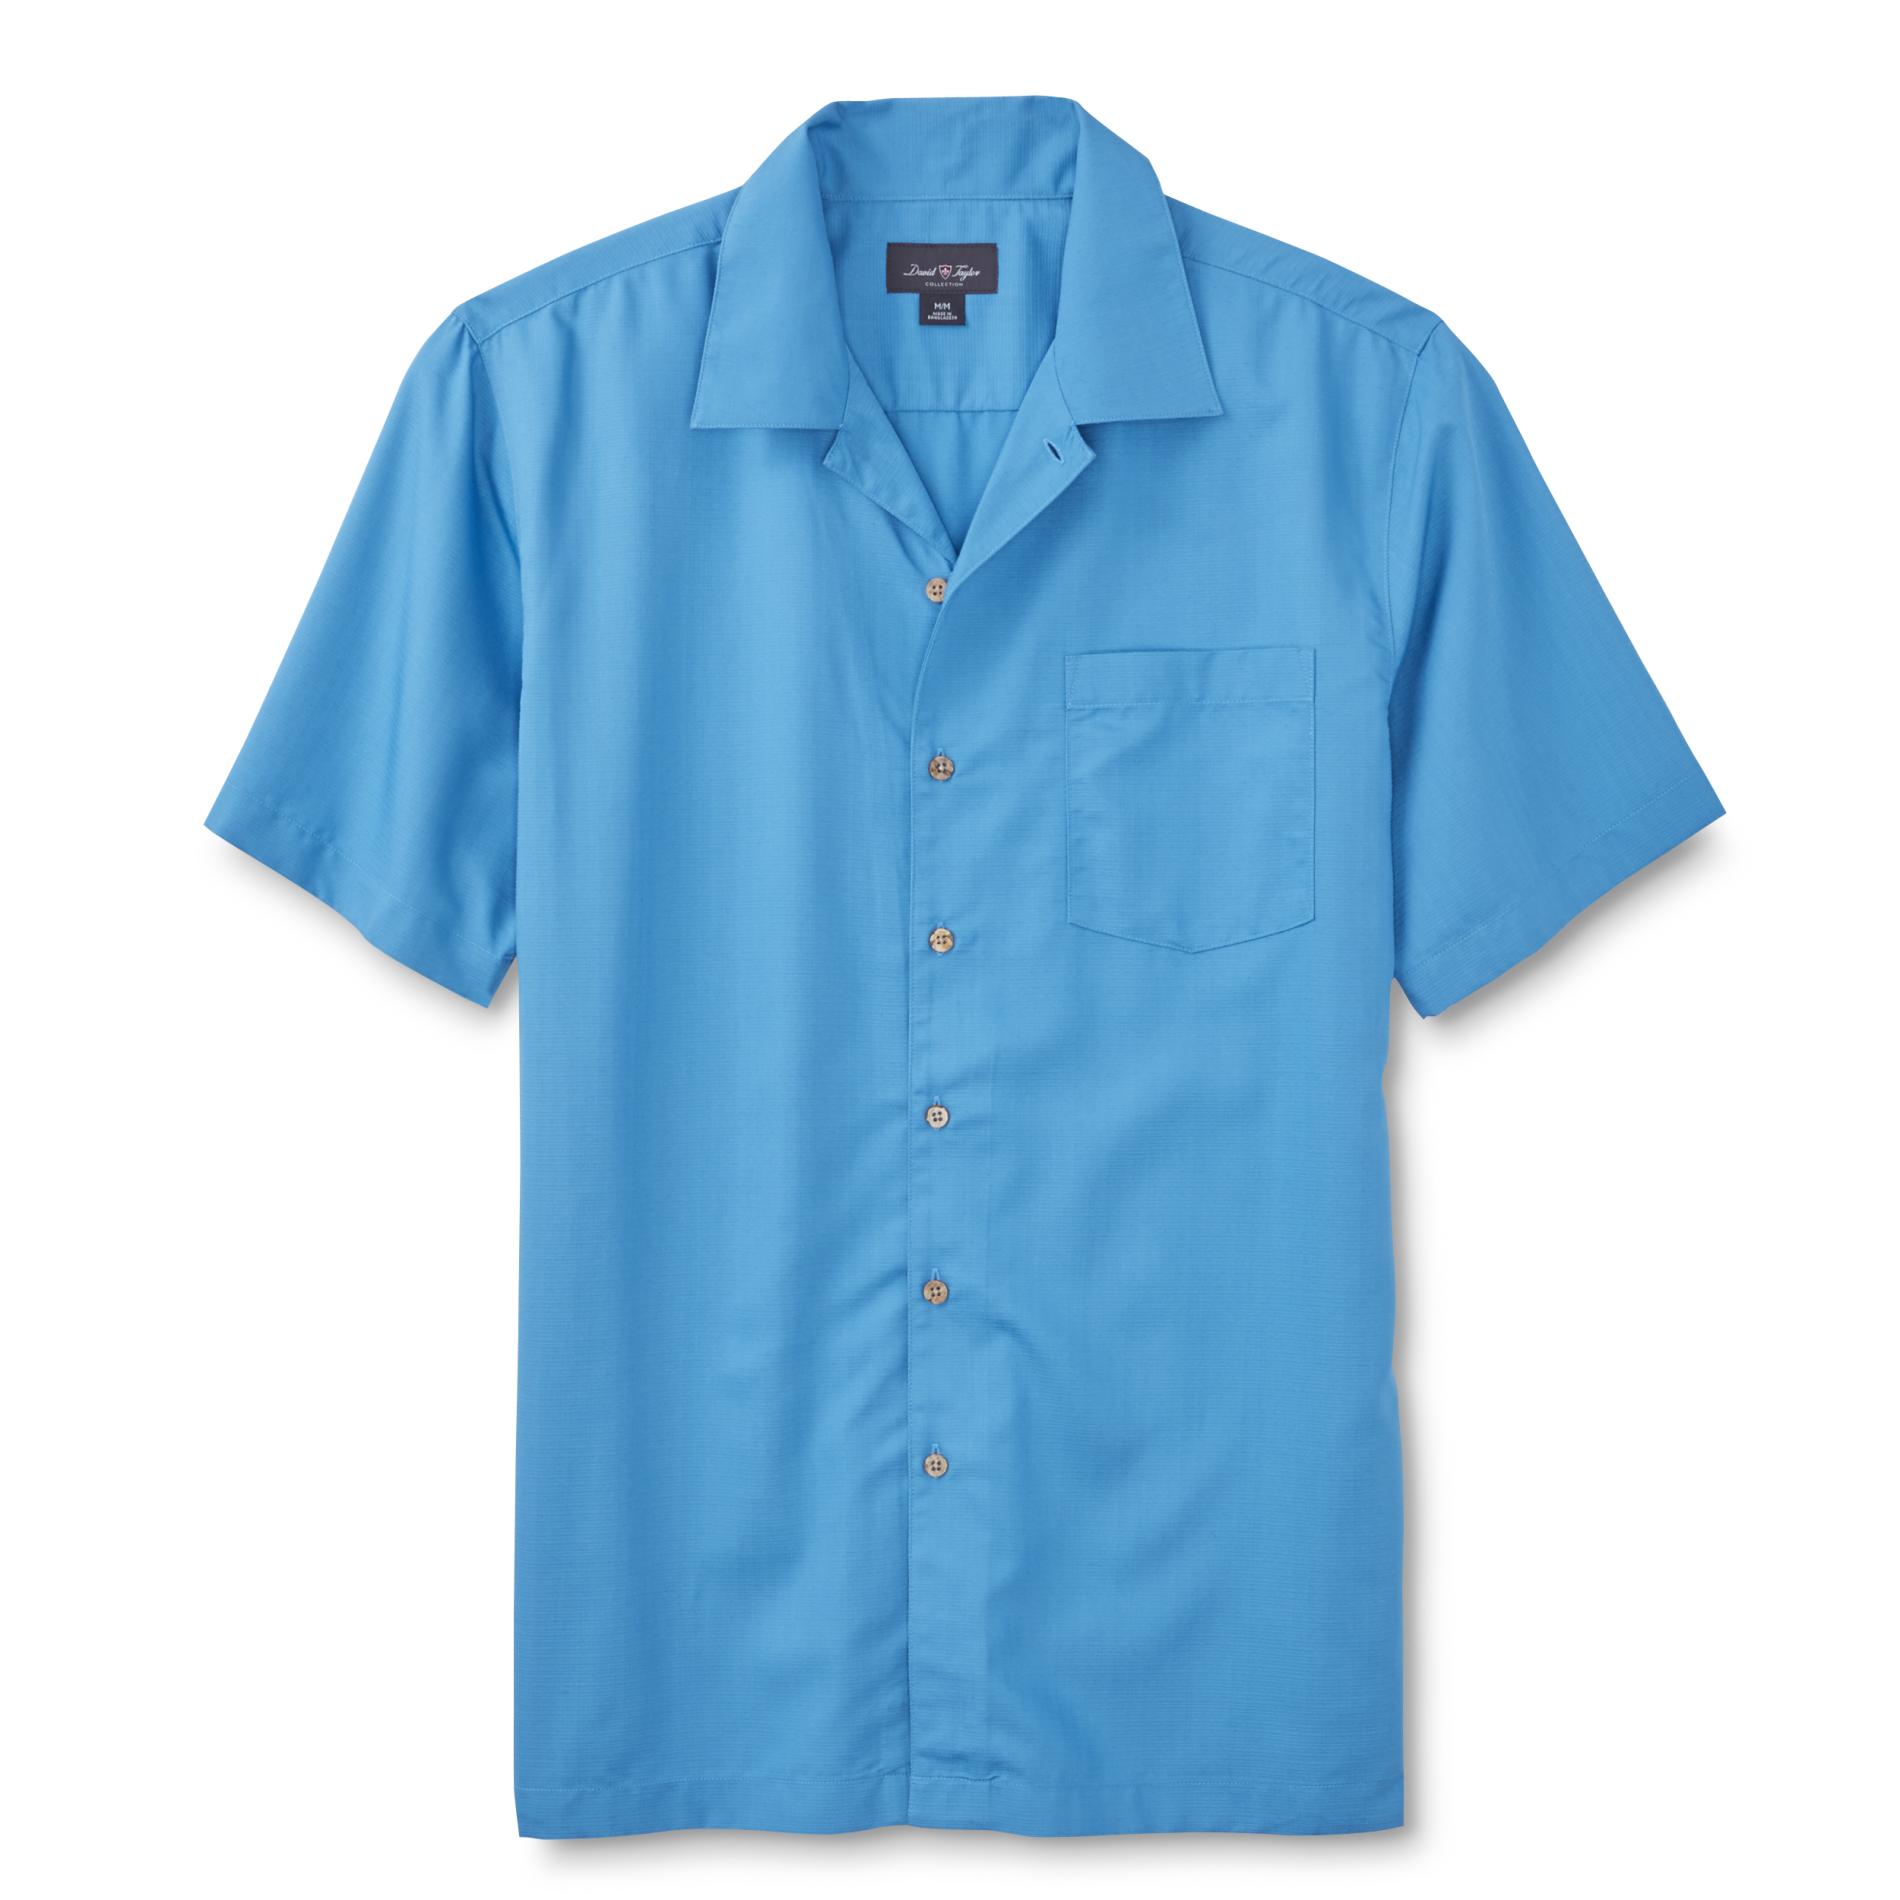 David Taylor Collection Men's Button-Front Shirt